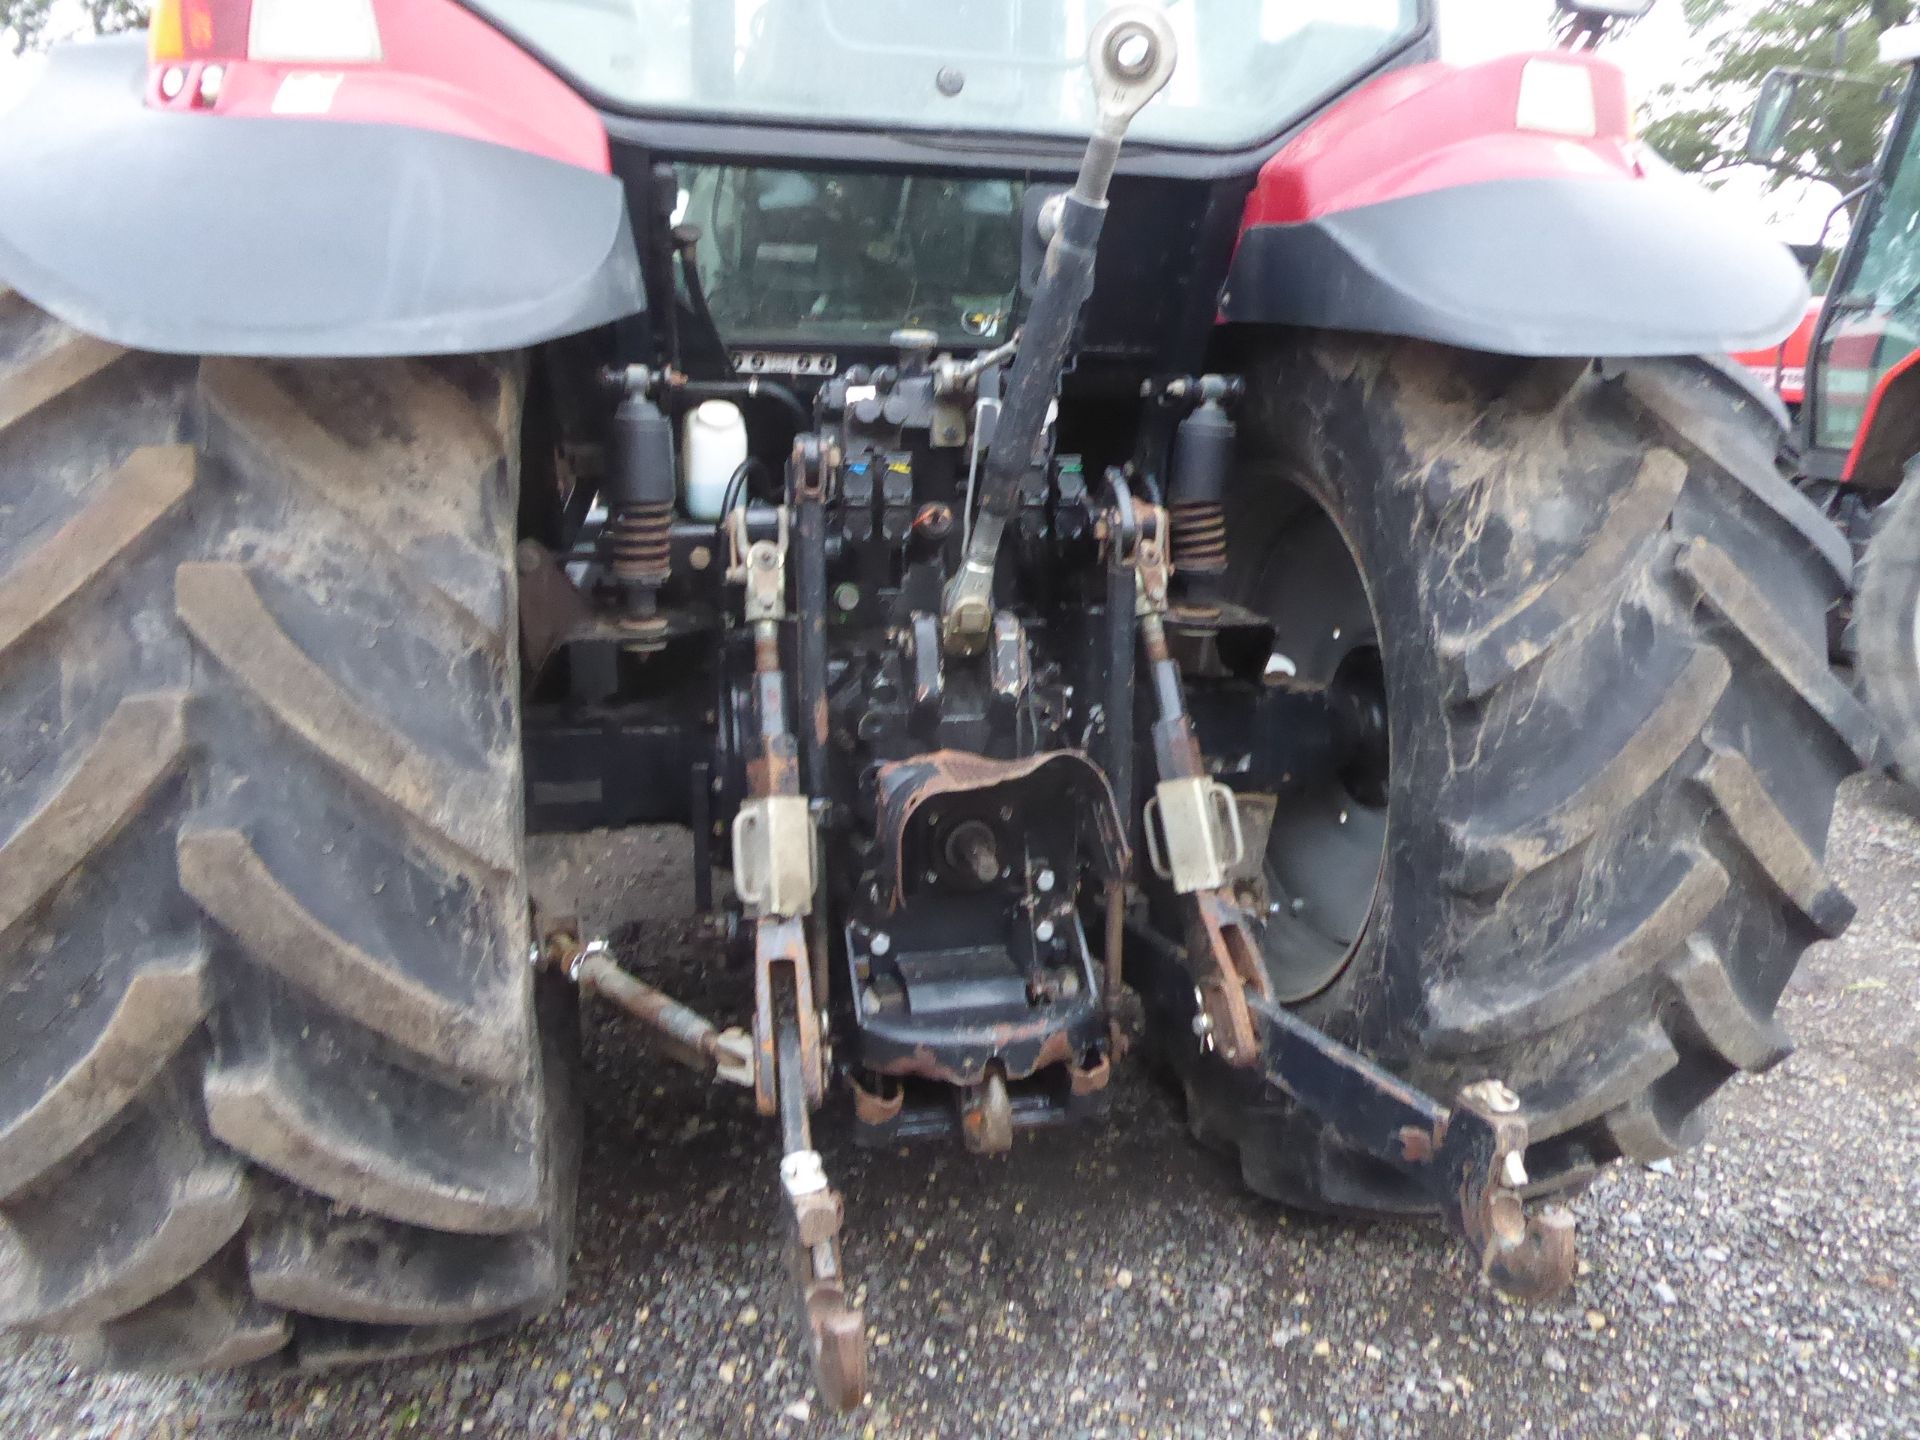 Case MXM155 tractor,YN54 JOV, 9250 hours, 4 spool valves - Image 3 of 7